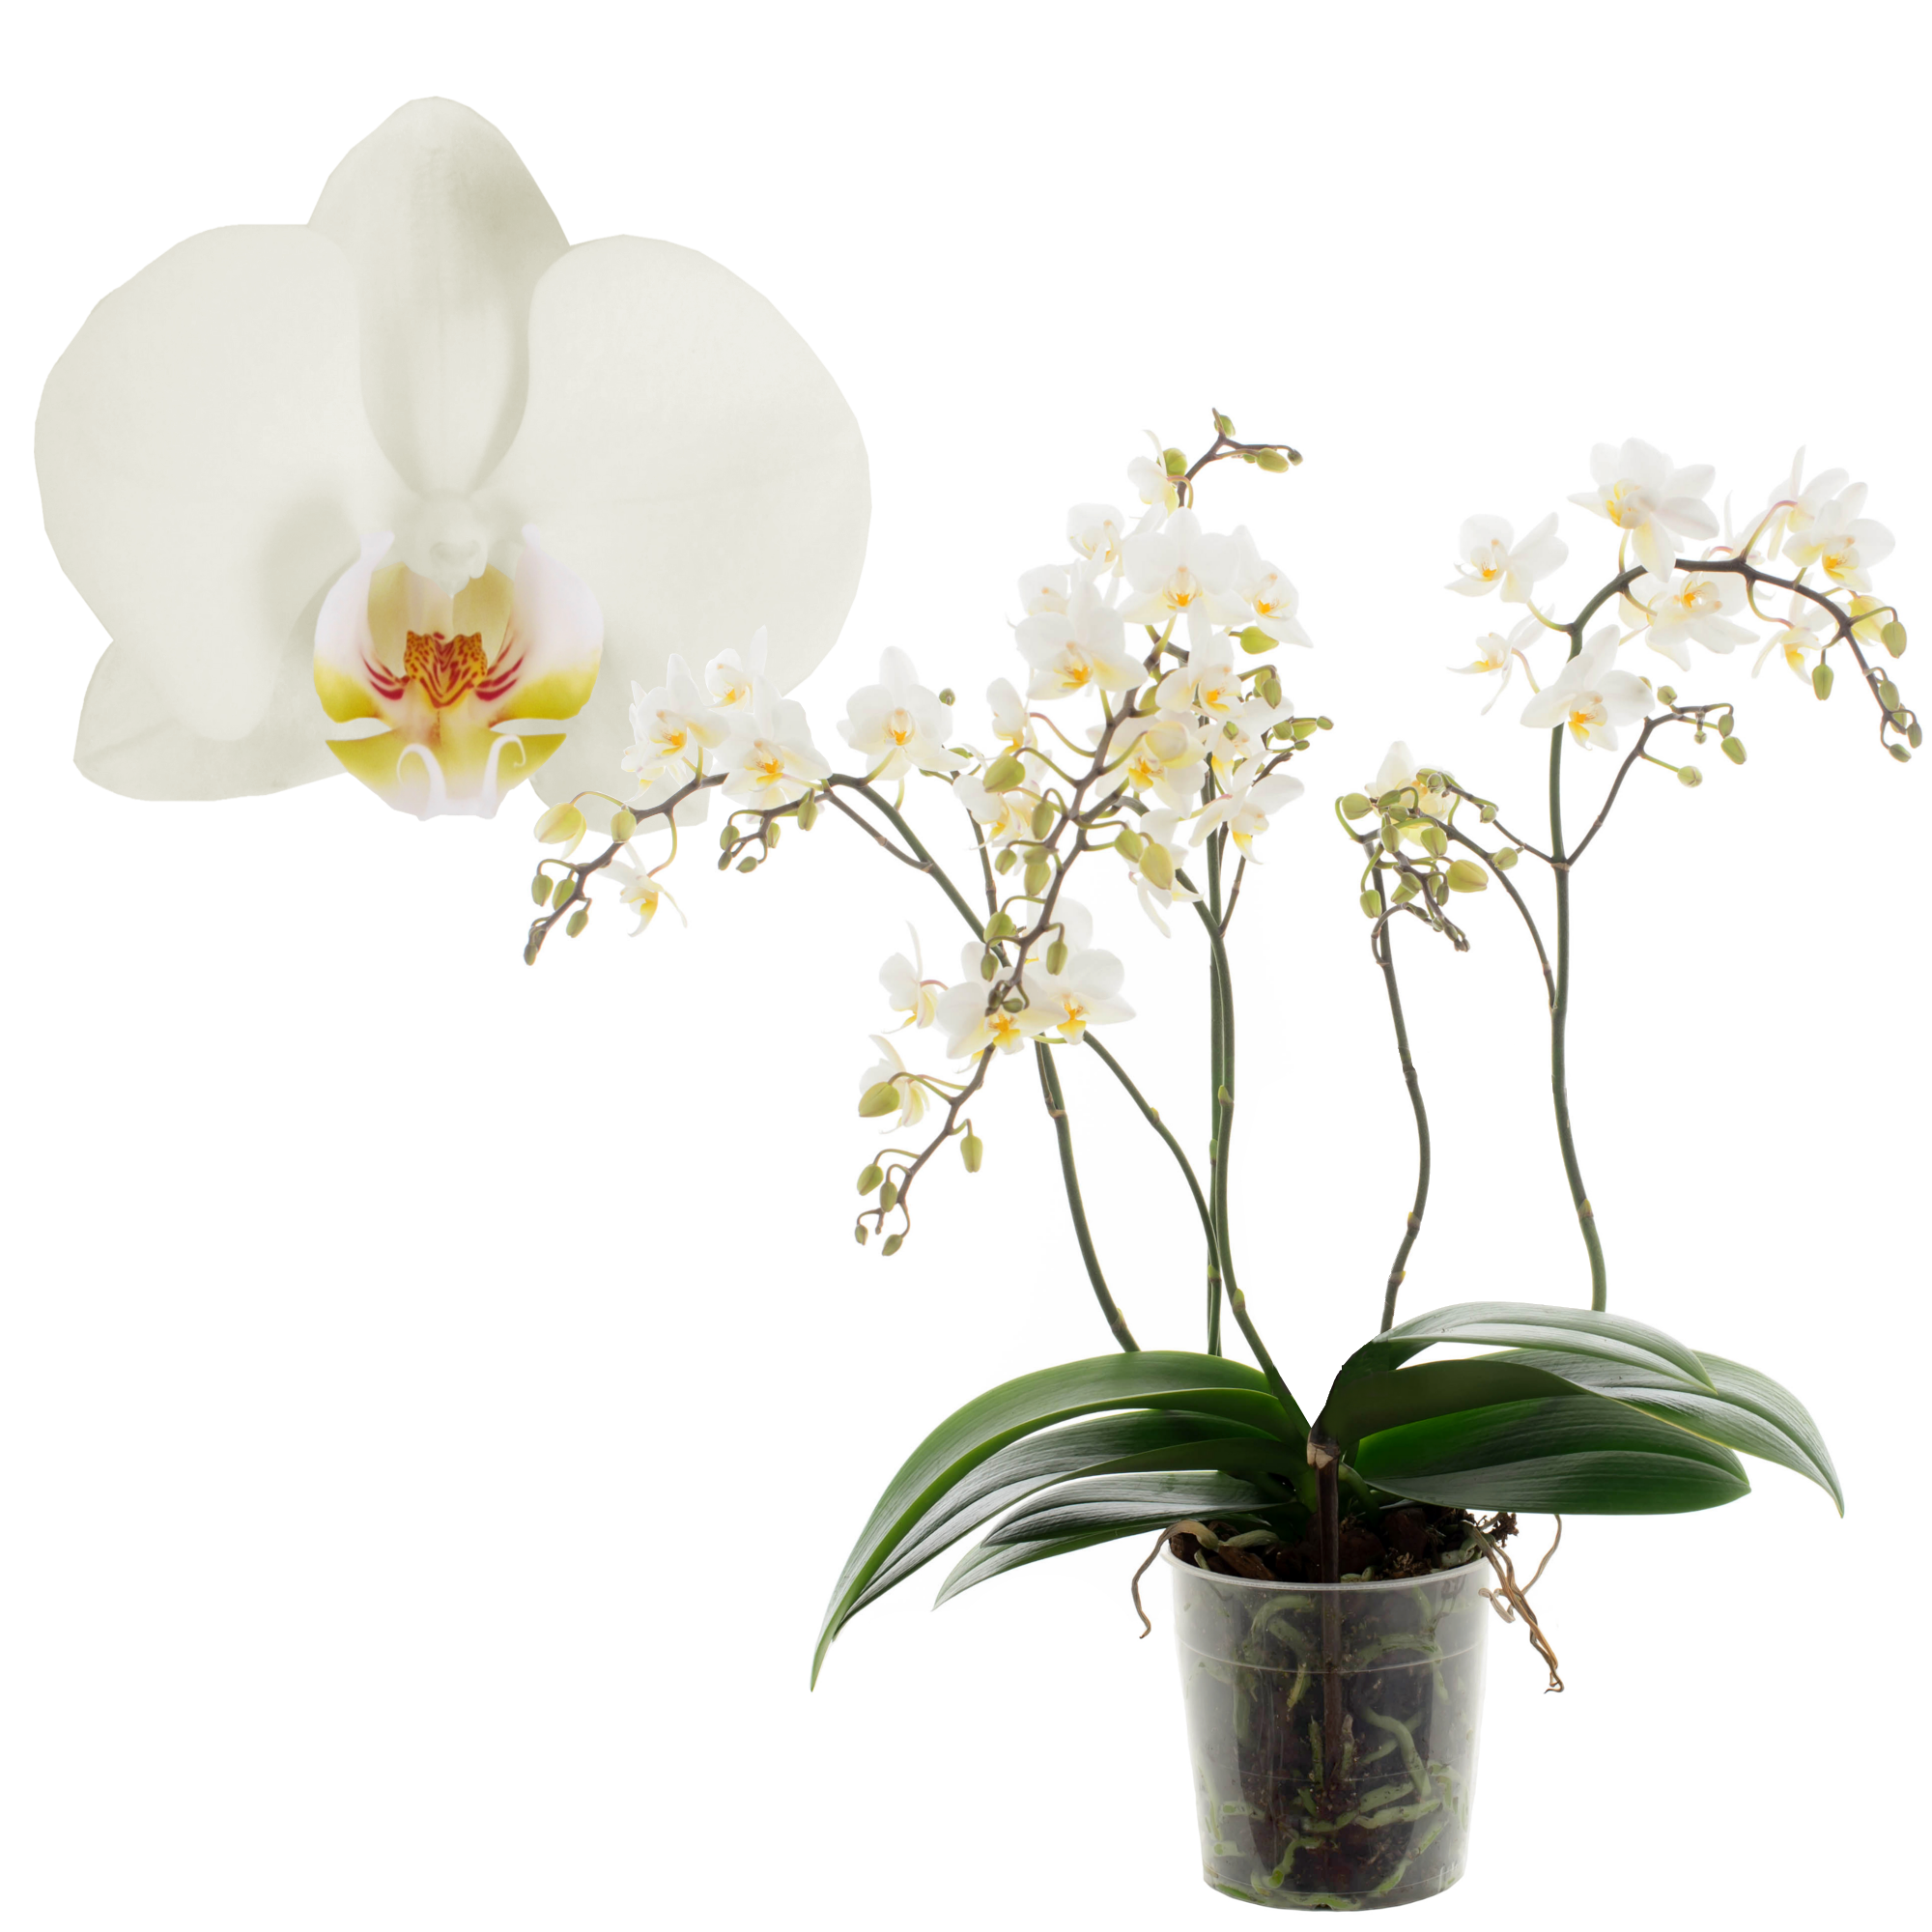 Schmetterlingsorchidee 'Wild White' 4 Rispen weiß, 12 cm Topf + product picture